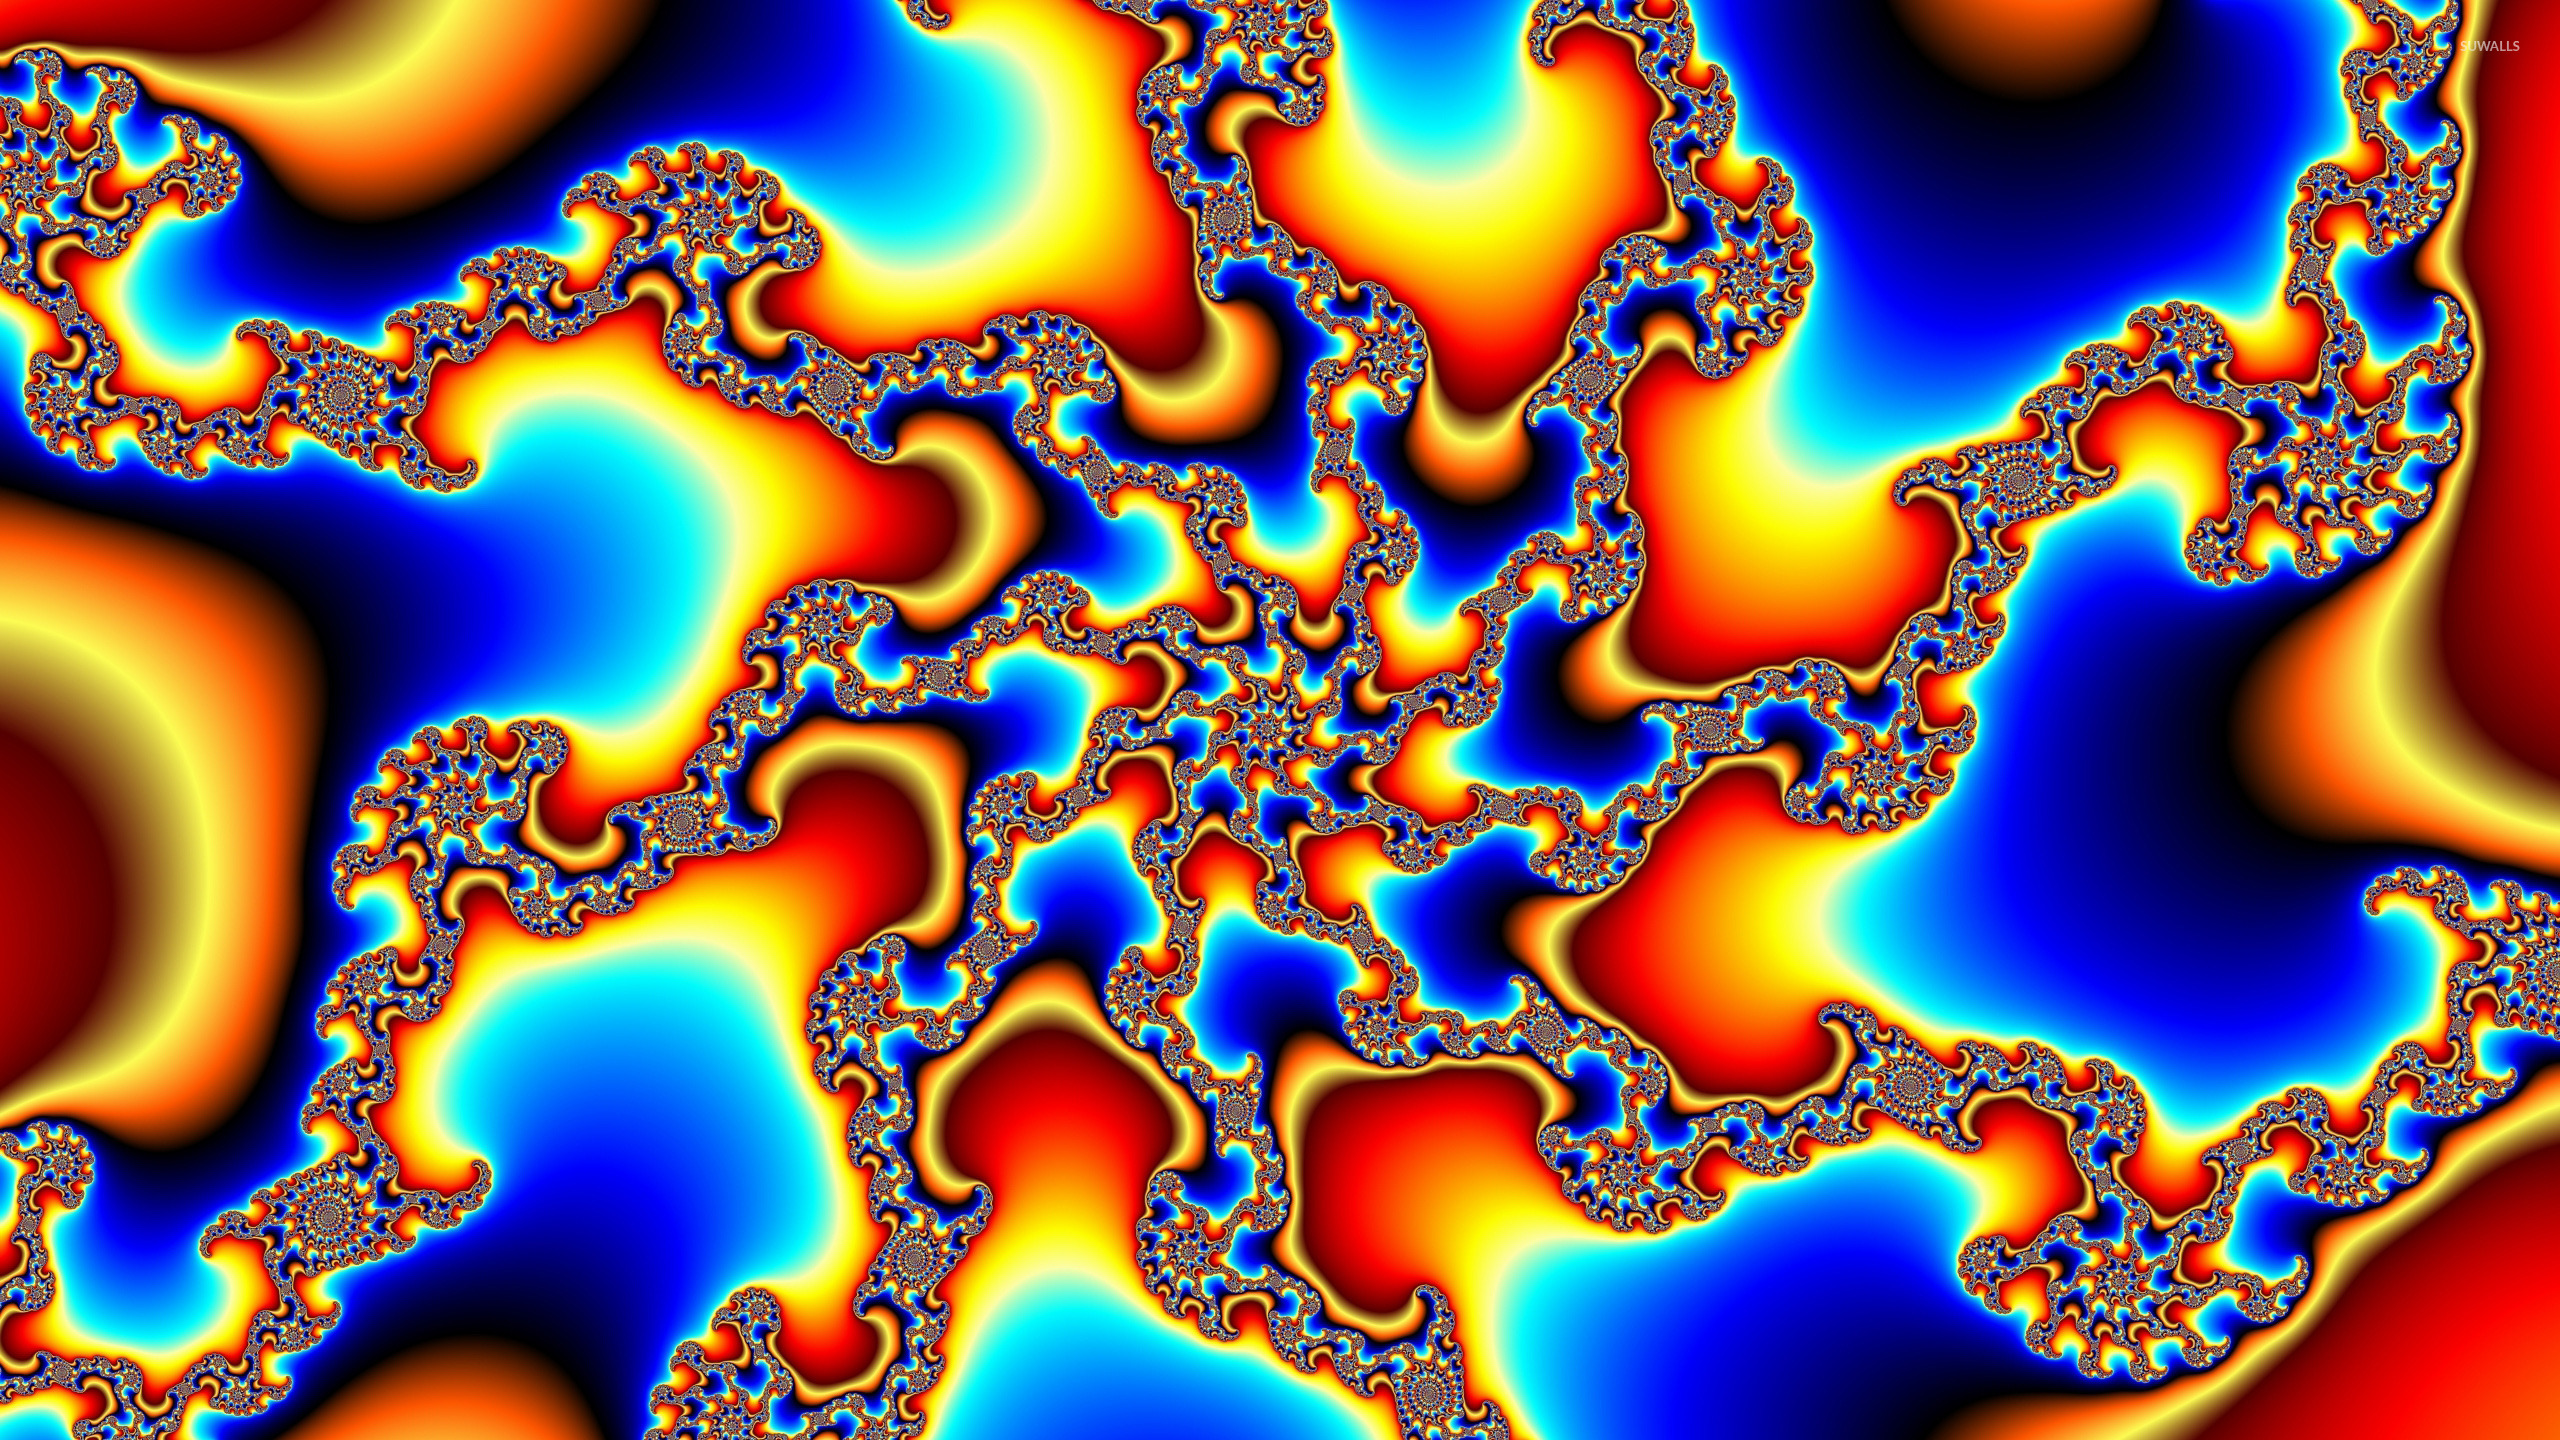 Hypnotic Swirl Wallpaper Abstract